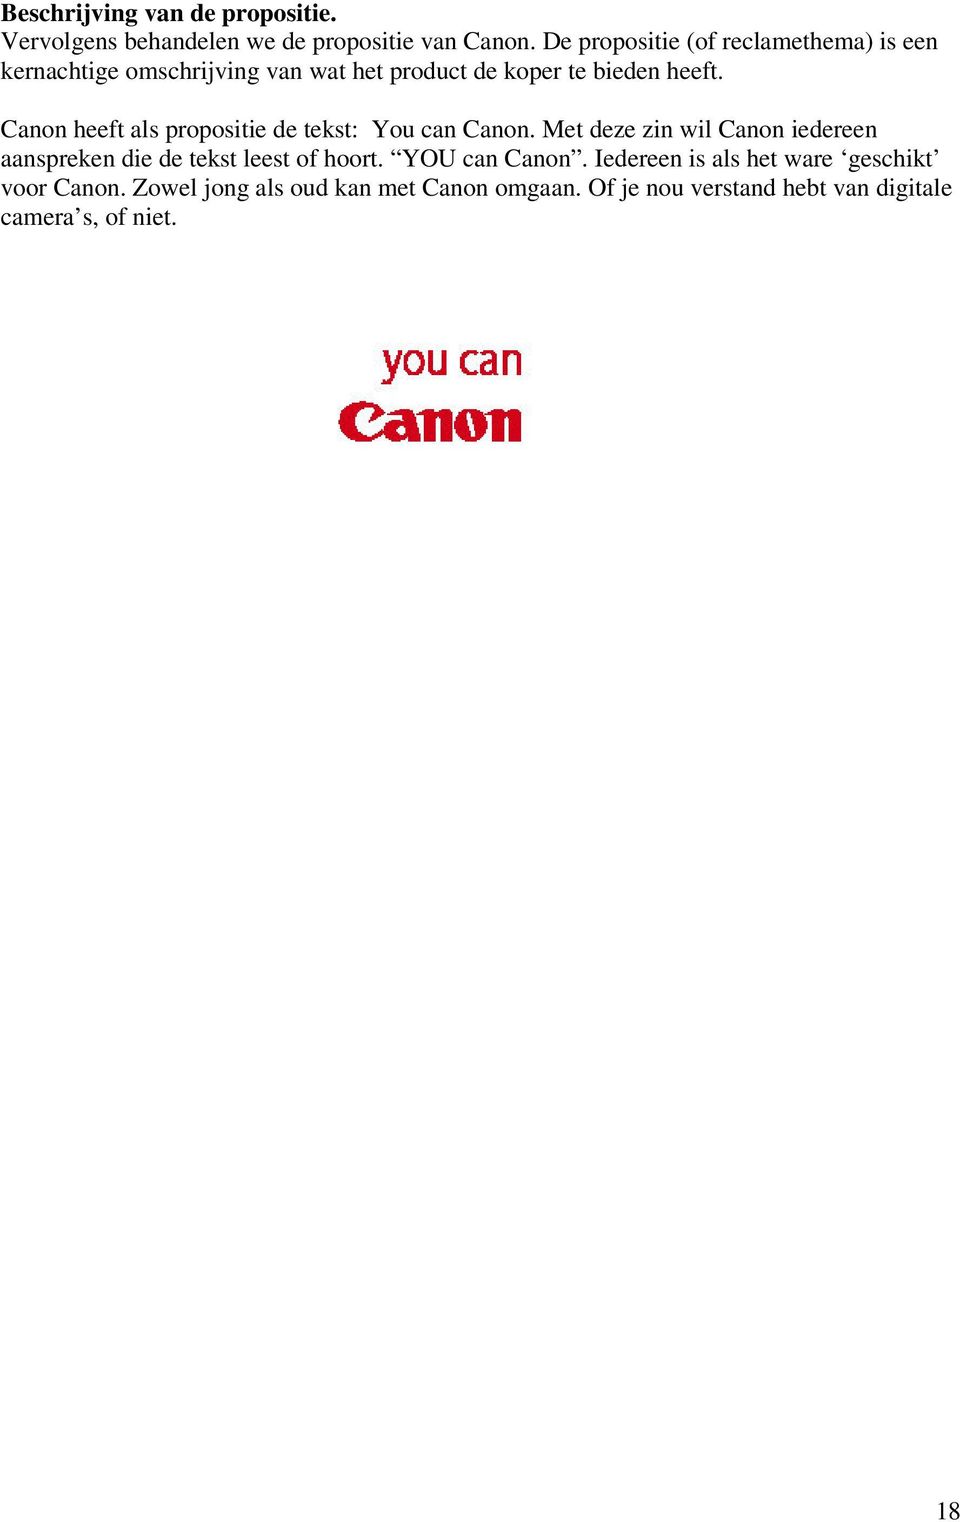 Canon heeft als propositie de tekst: You can Canon.